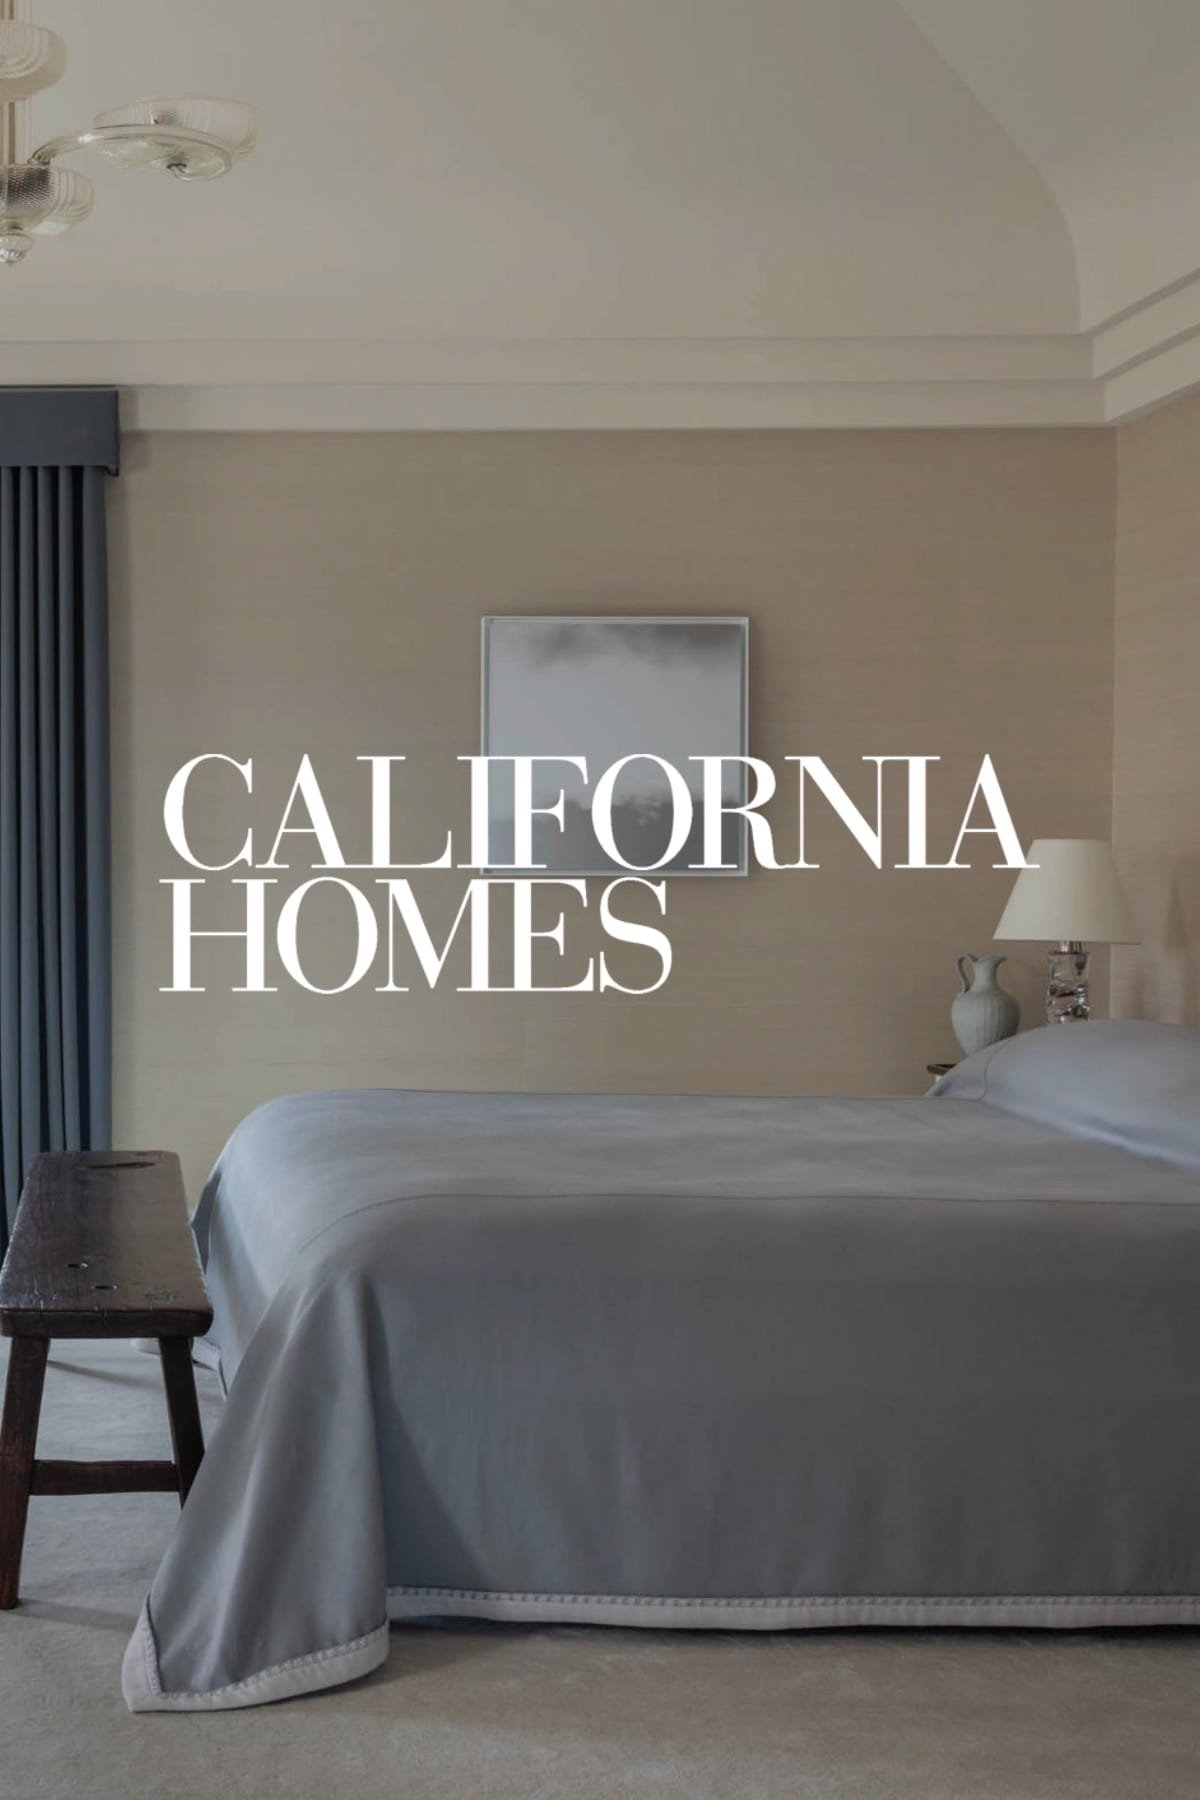 California Homes